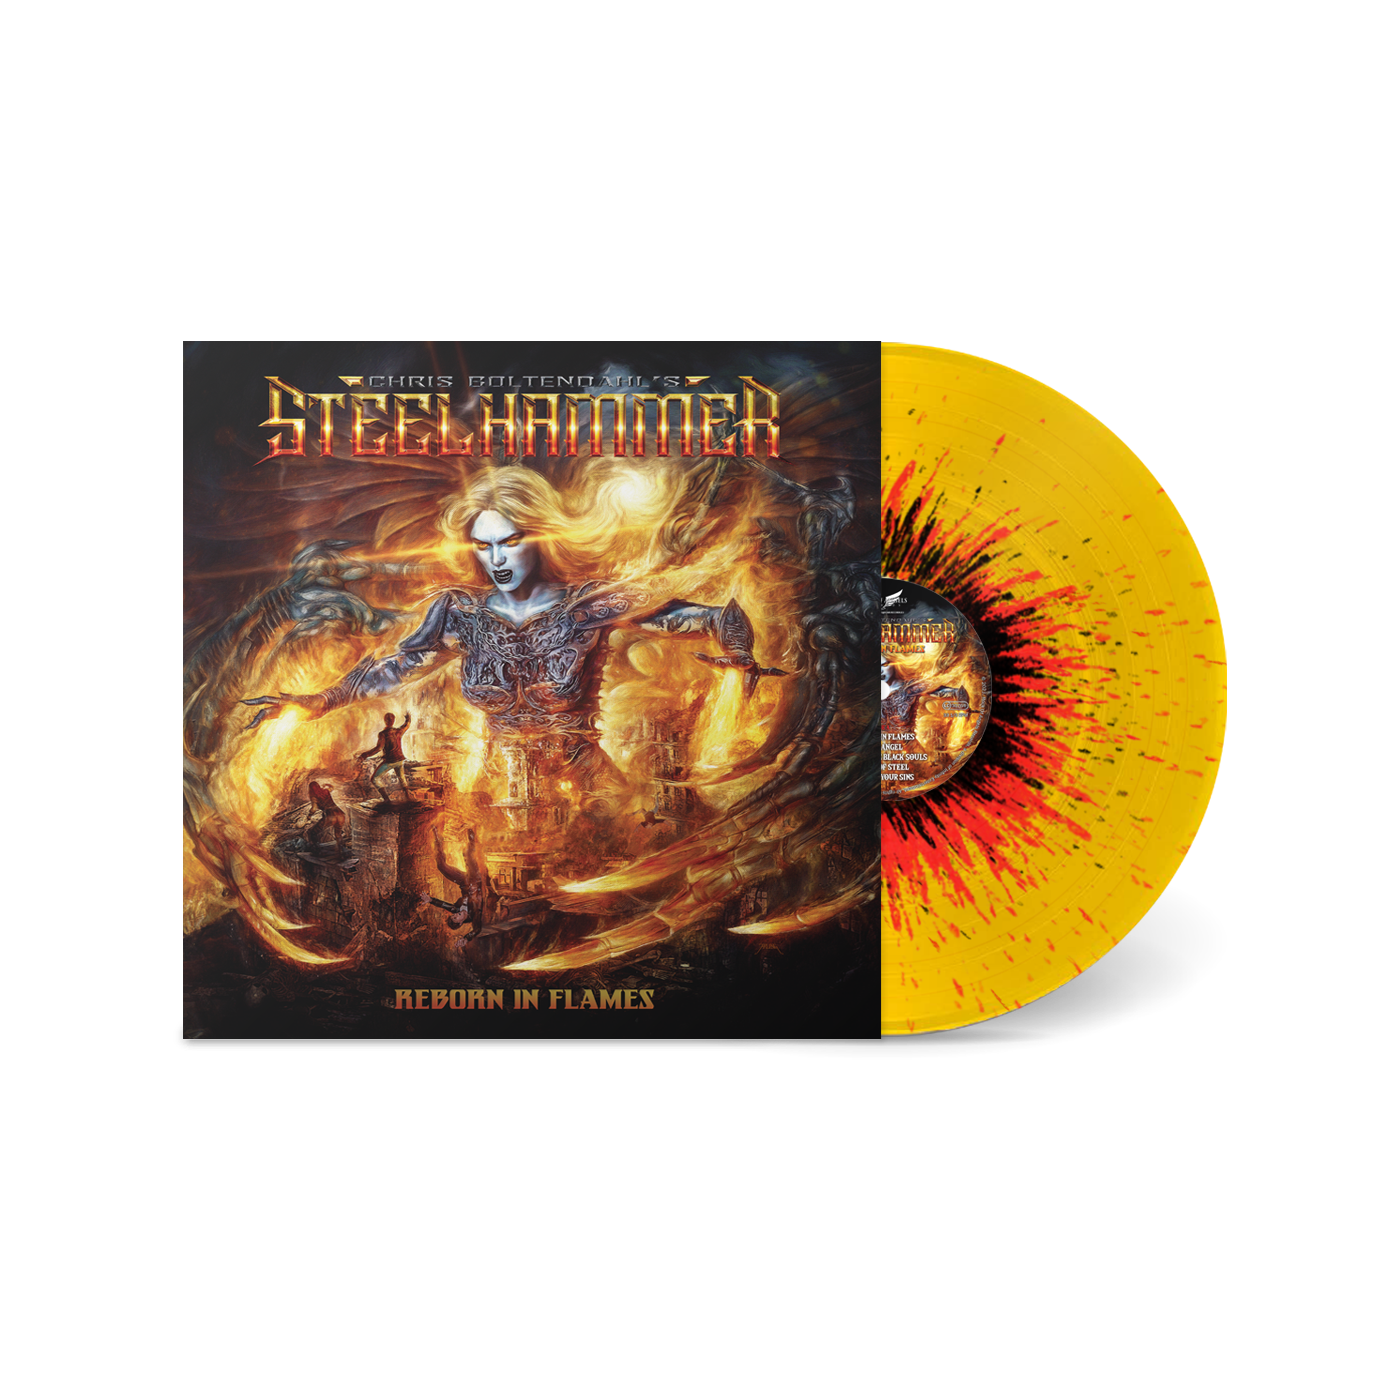 STEELHAMMER "Reborn In Flames" - SPLATTER (Limited 50 Copies)